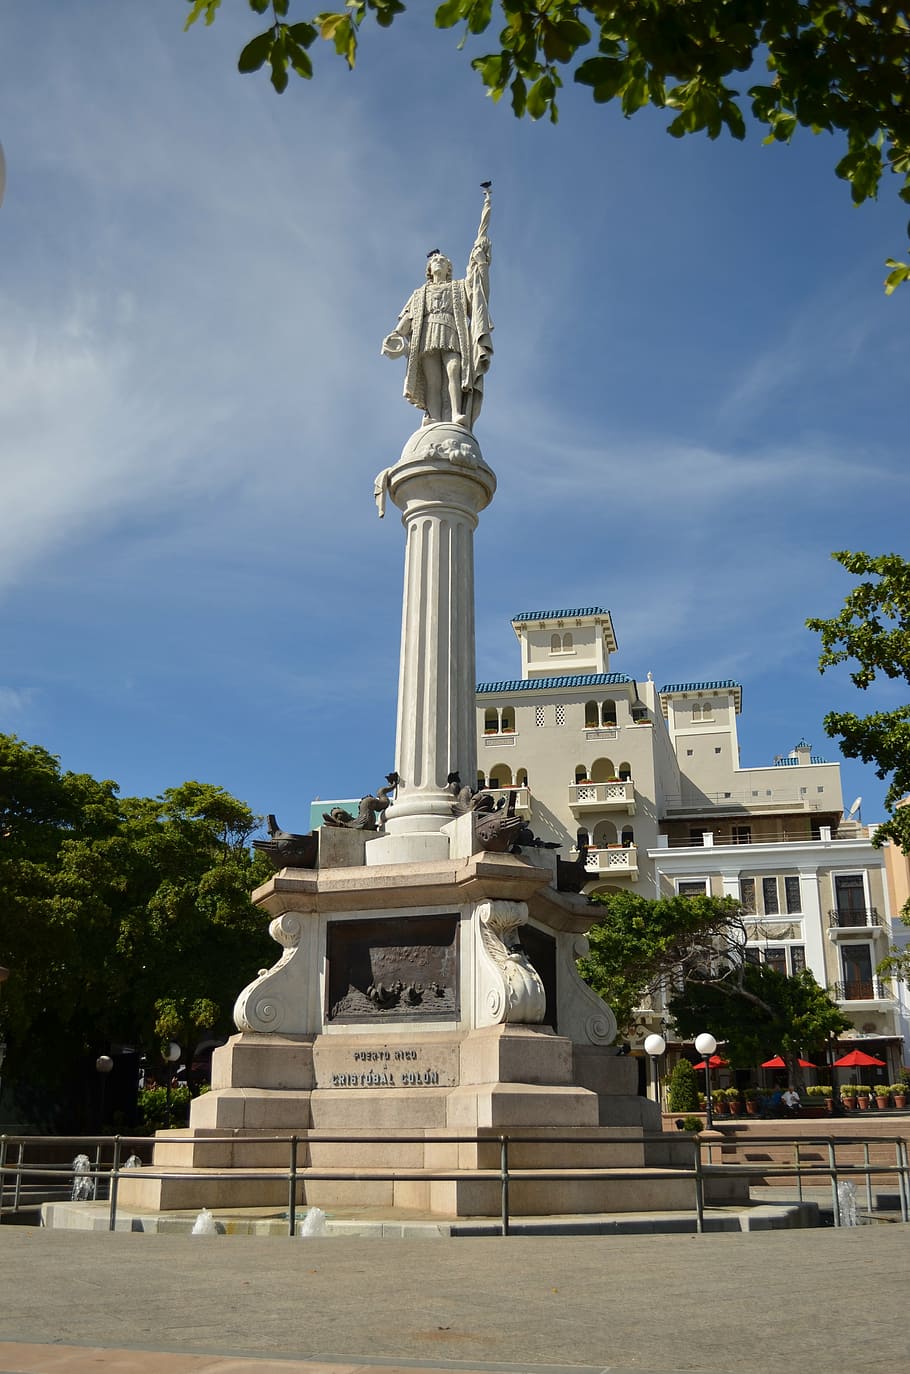 san juan, puerto rico, colon statue, uSA, famous Place, statue, sky, sculpture, architecture, art and craft